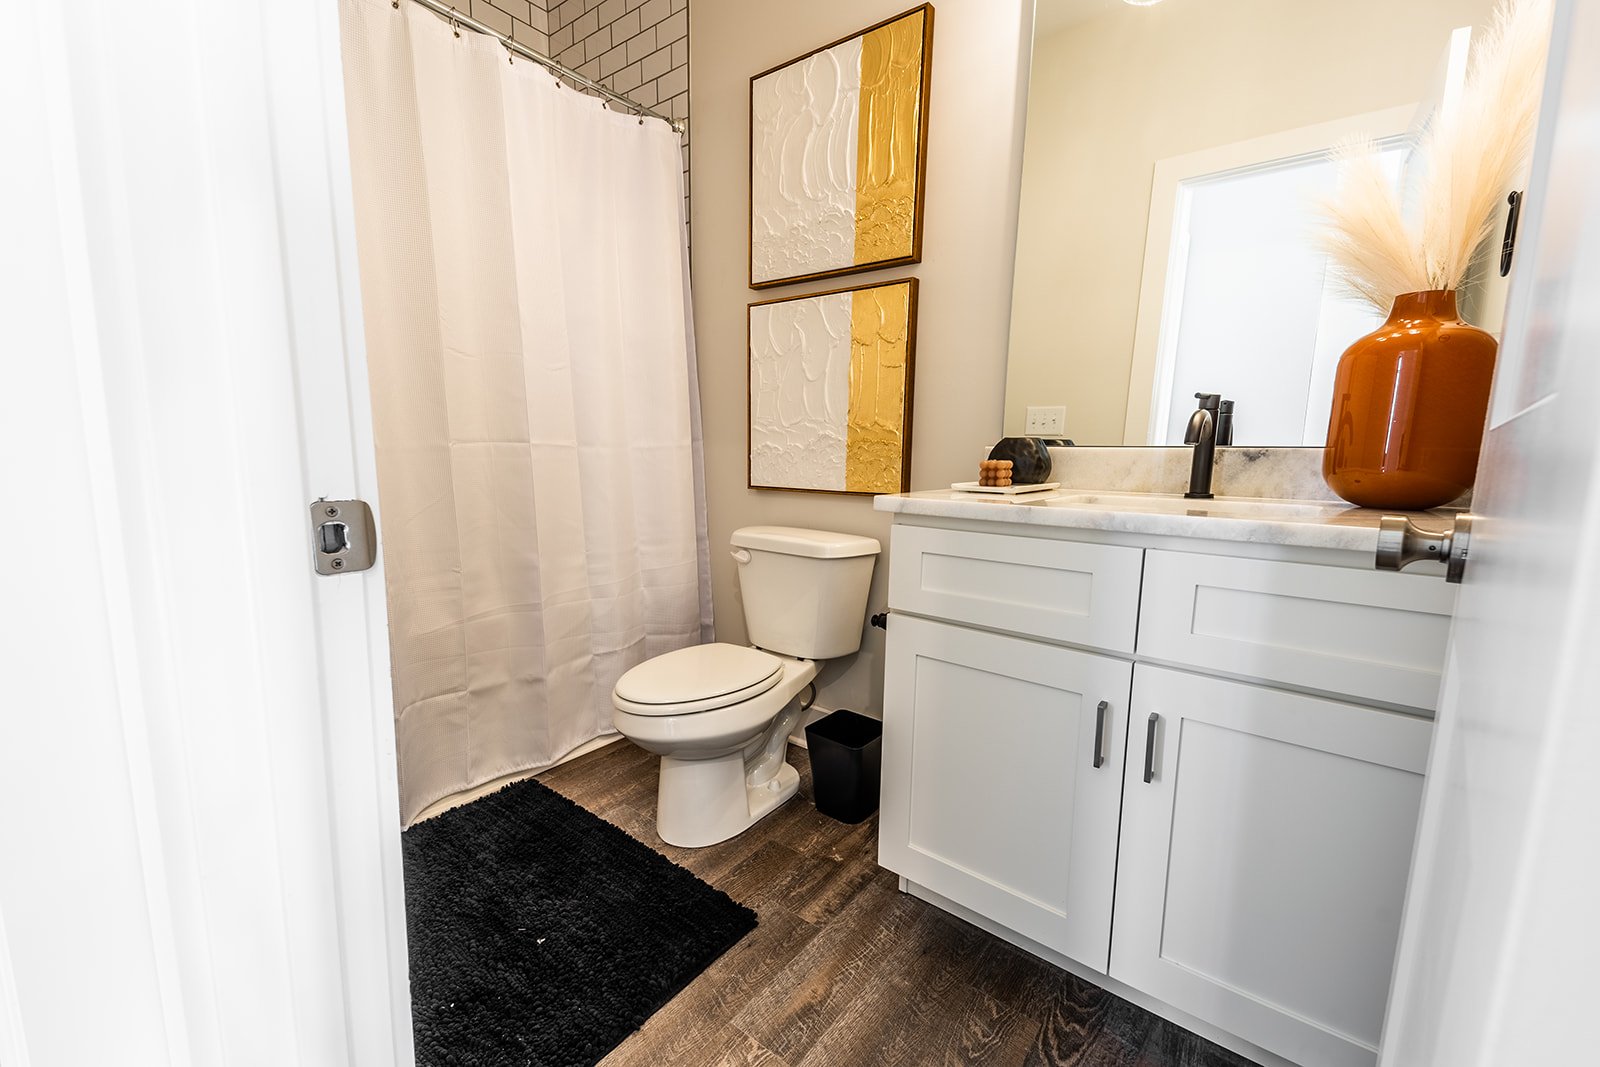 Unit 1 - 2nd Floor Shared Hallway Full Bathroom featuring Single Vanity and Shower/Tub Combo. (2nd Floor)